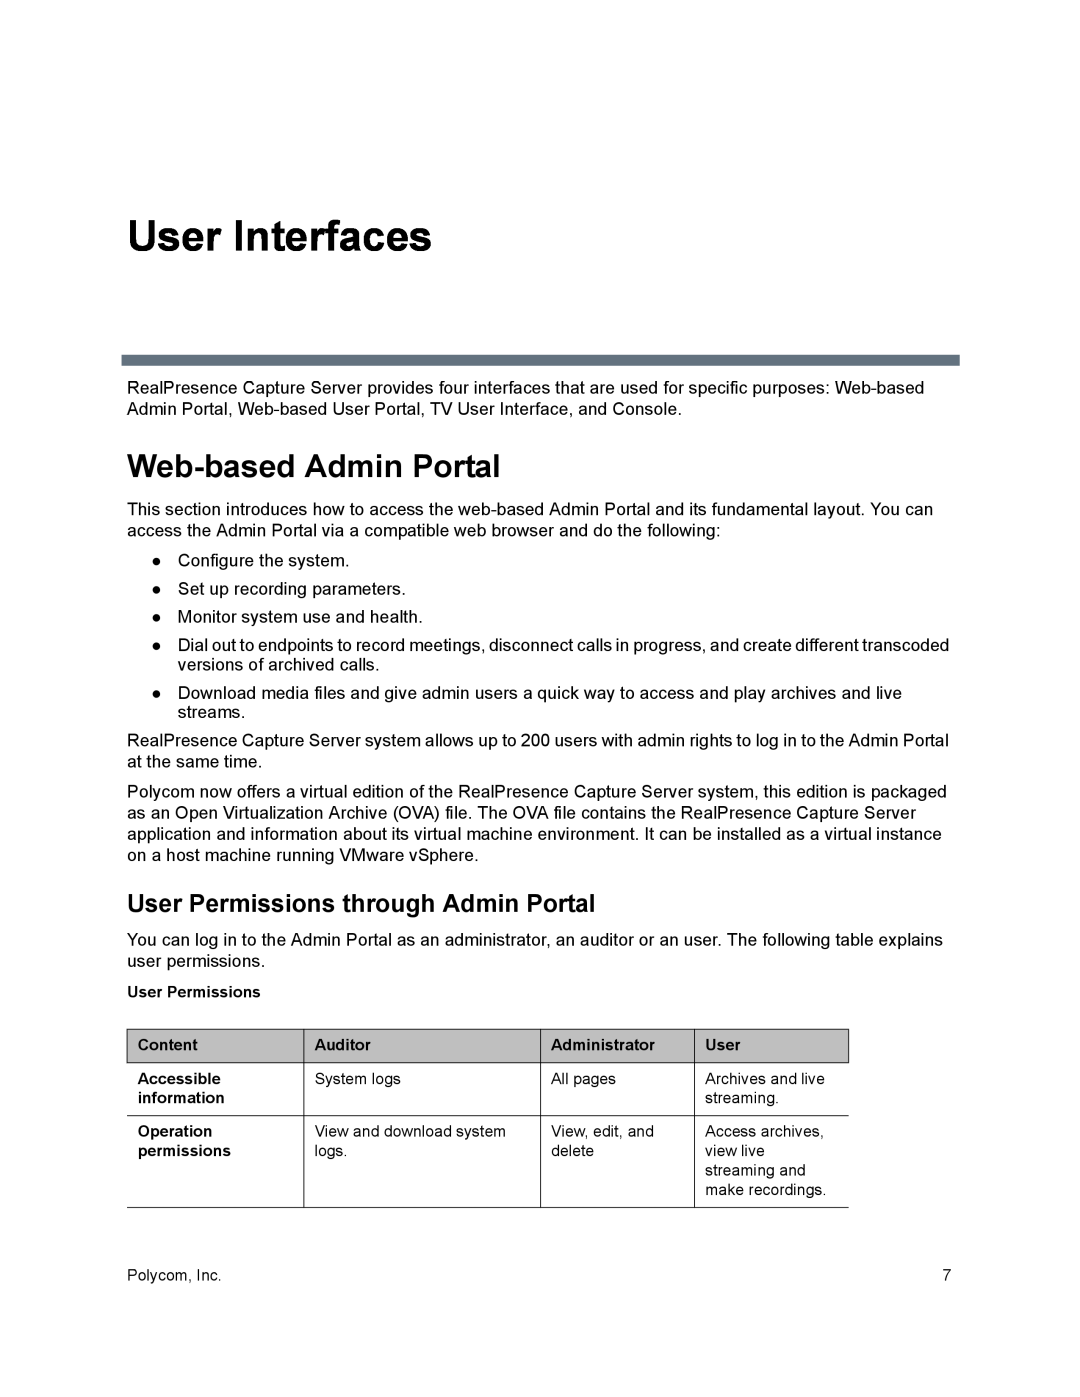 Polycom 40/0 manual User Interfaces, Web-based Admin Portal, User Permissions through Admin Portal 